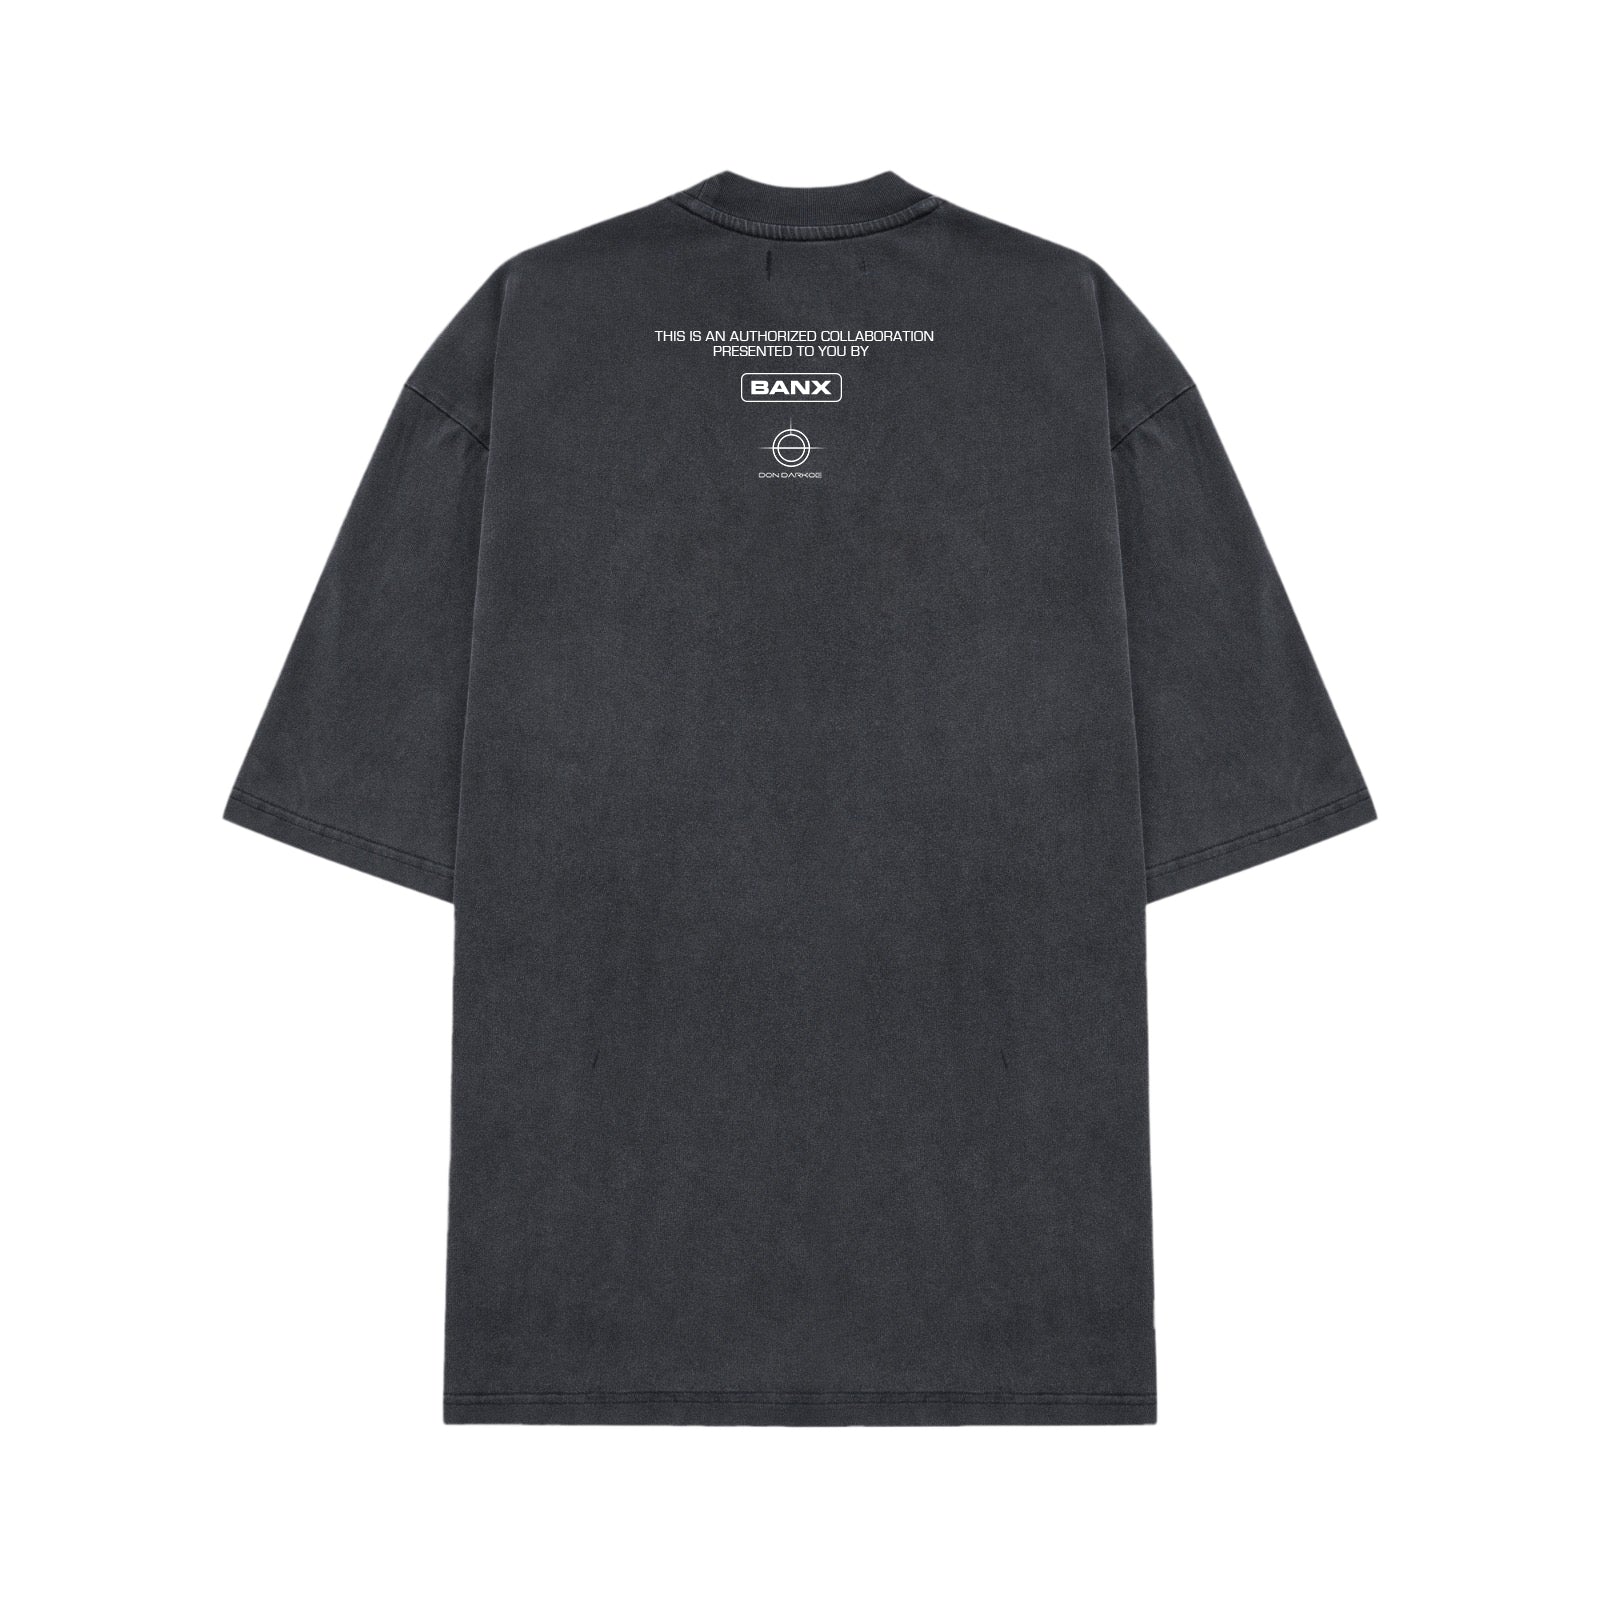 BANX x DON DARKOE - CERTIFIED NAN SLAPPER Oversized Shirt